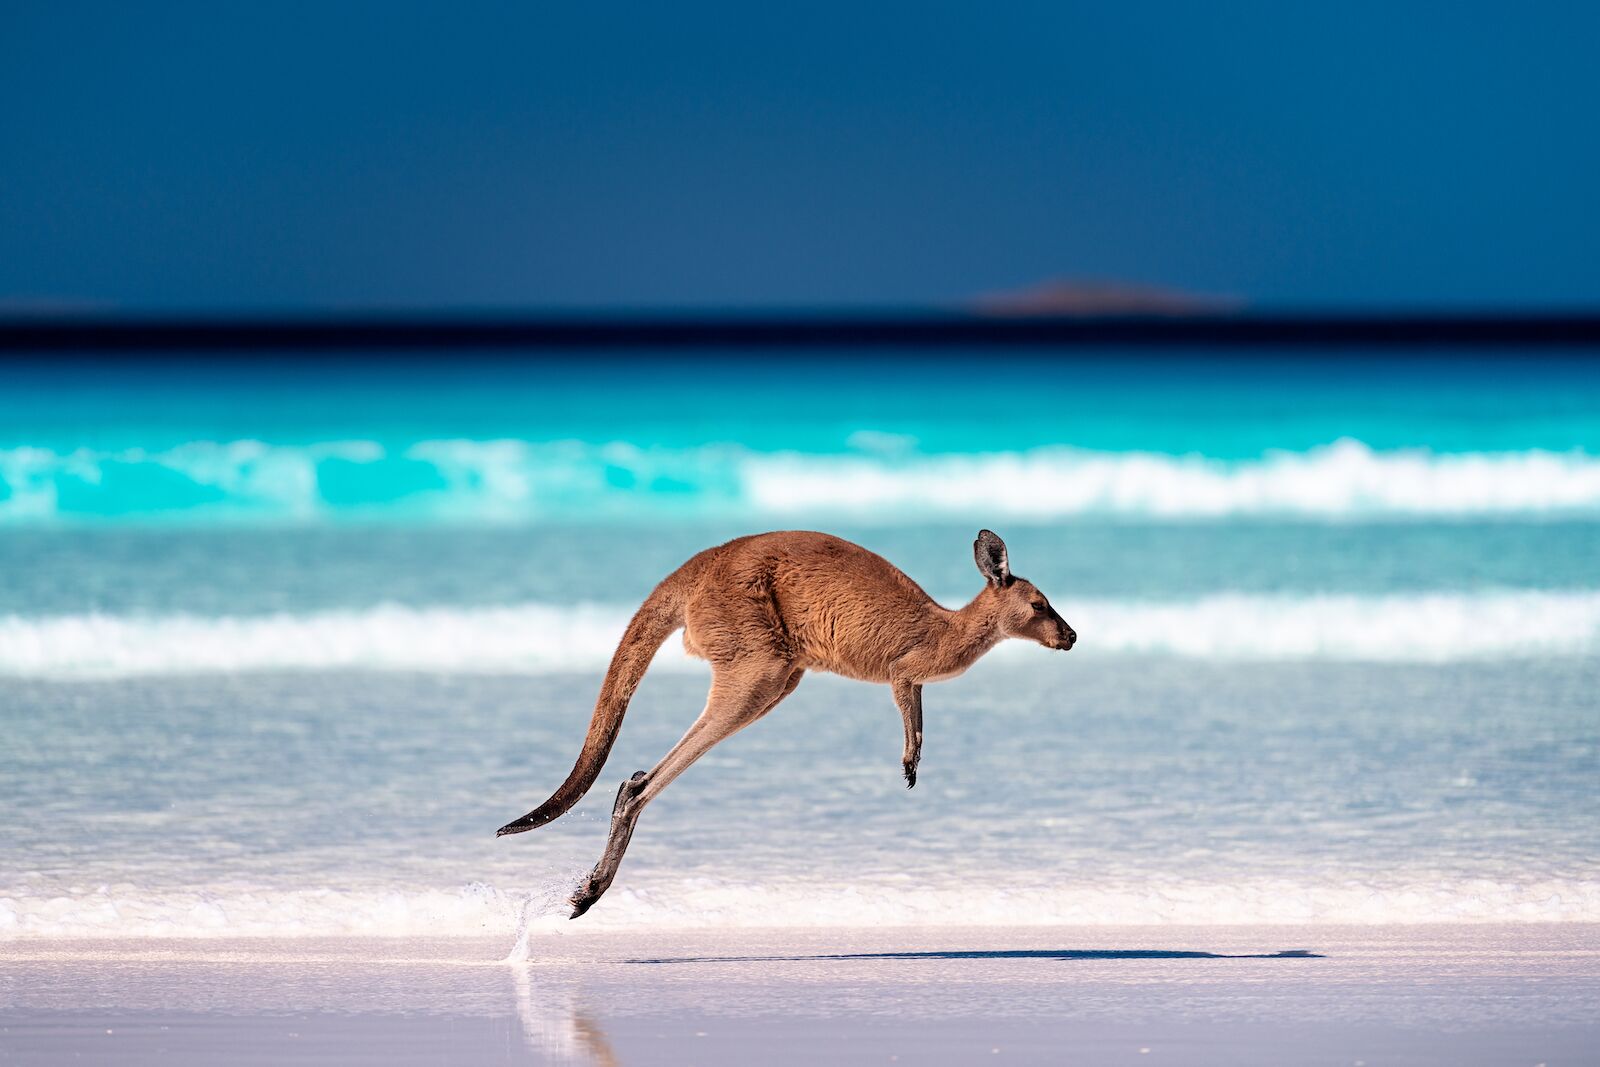 Kangaroo, hopping on the beach in Australia.